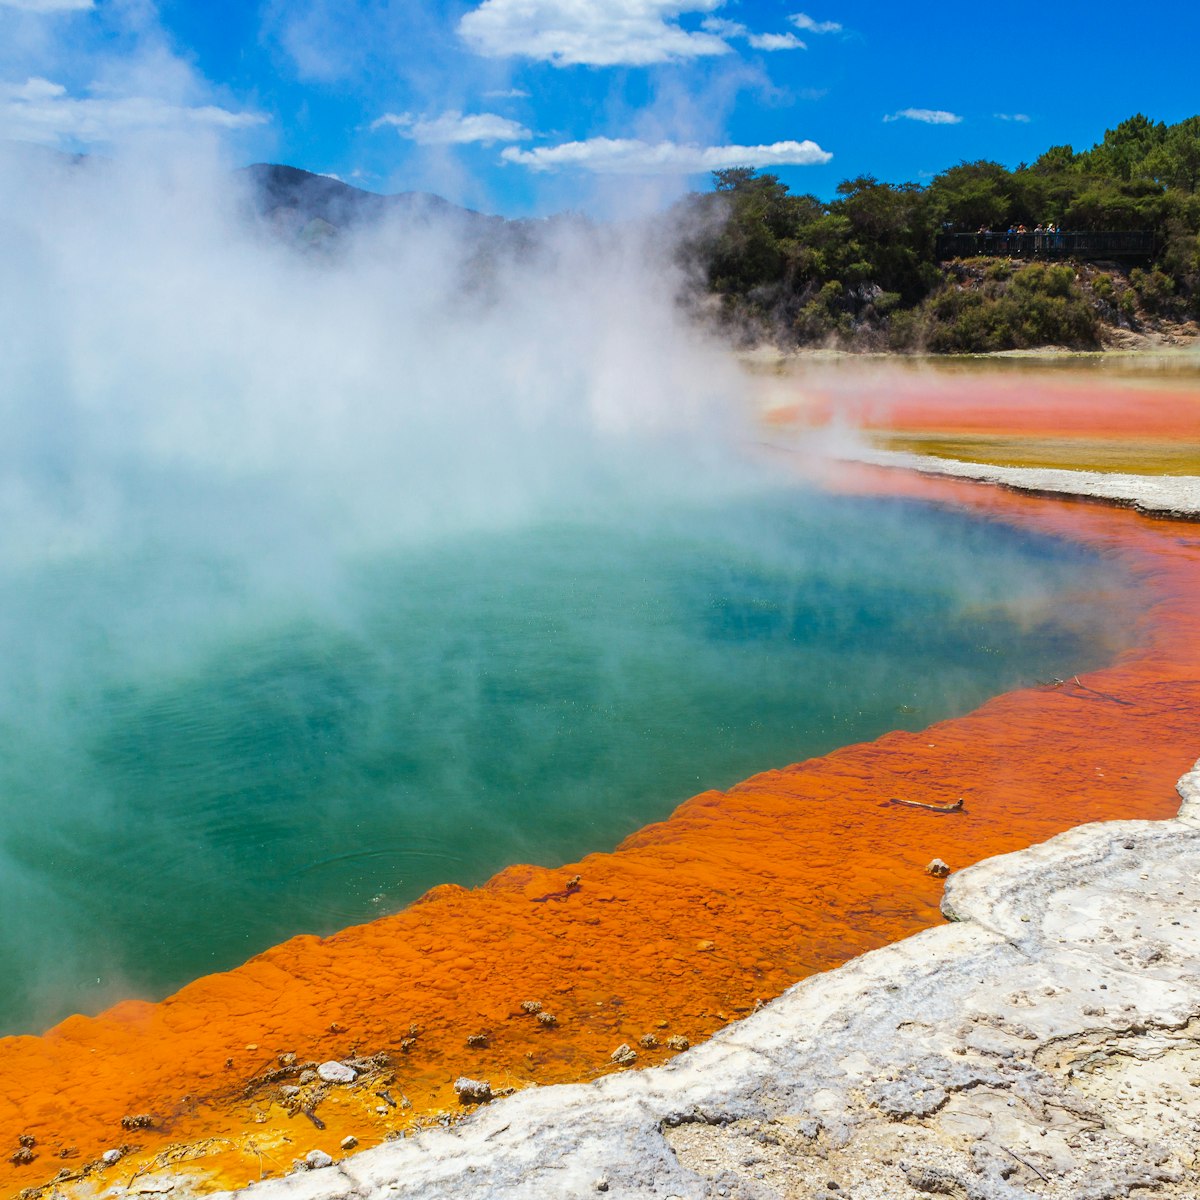 The Champagne Pool at Wai-O-Tapu or Sacred Waters – Thermal Wonderland, Rotorua, New Zealand.